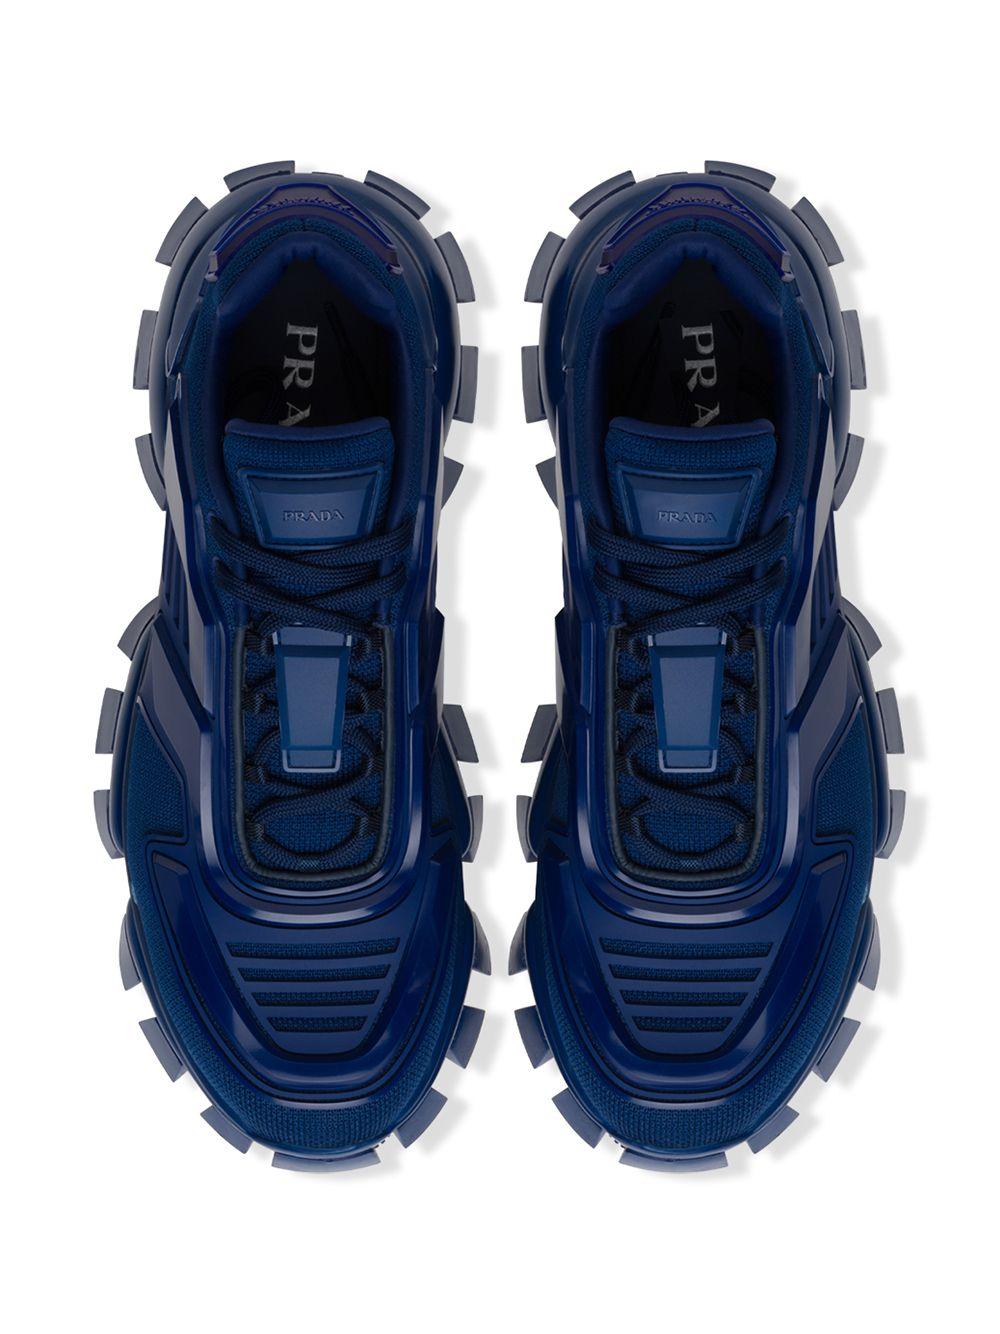 nedsænket span salvie Prada Leather Cloudbust Thunder Low-top Sneakers in Blue for Men - Lyst